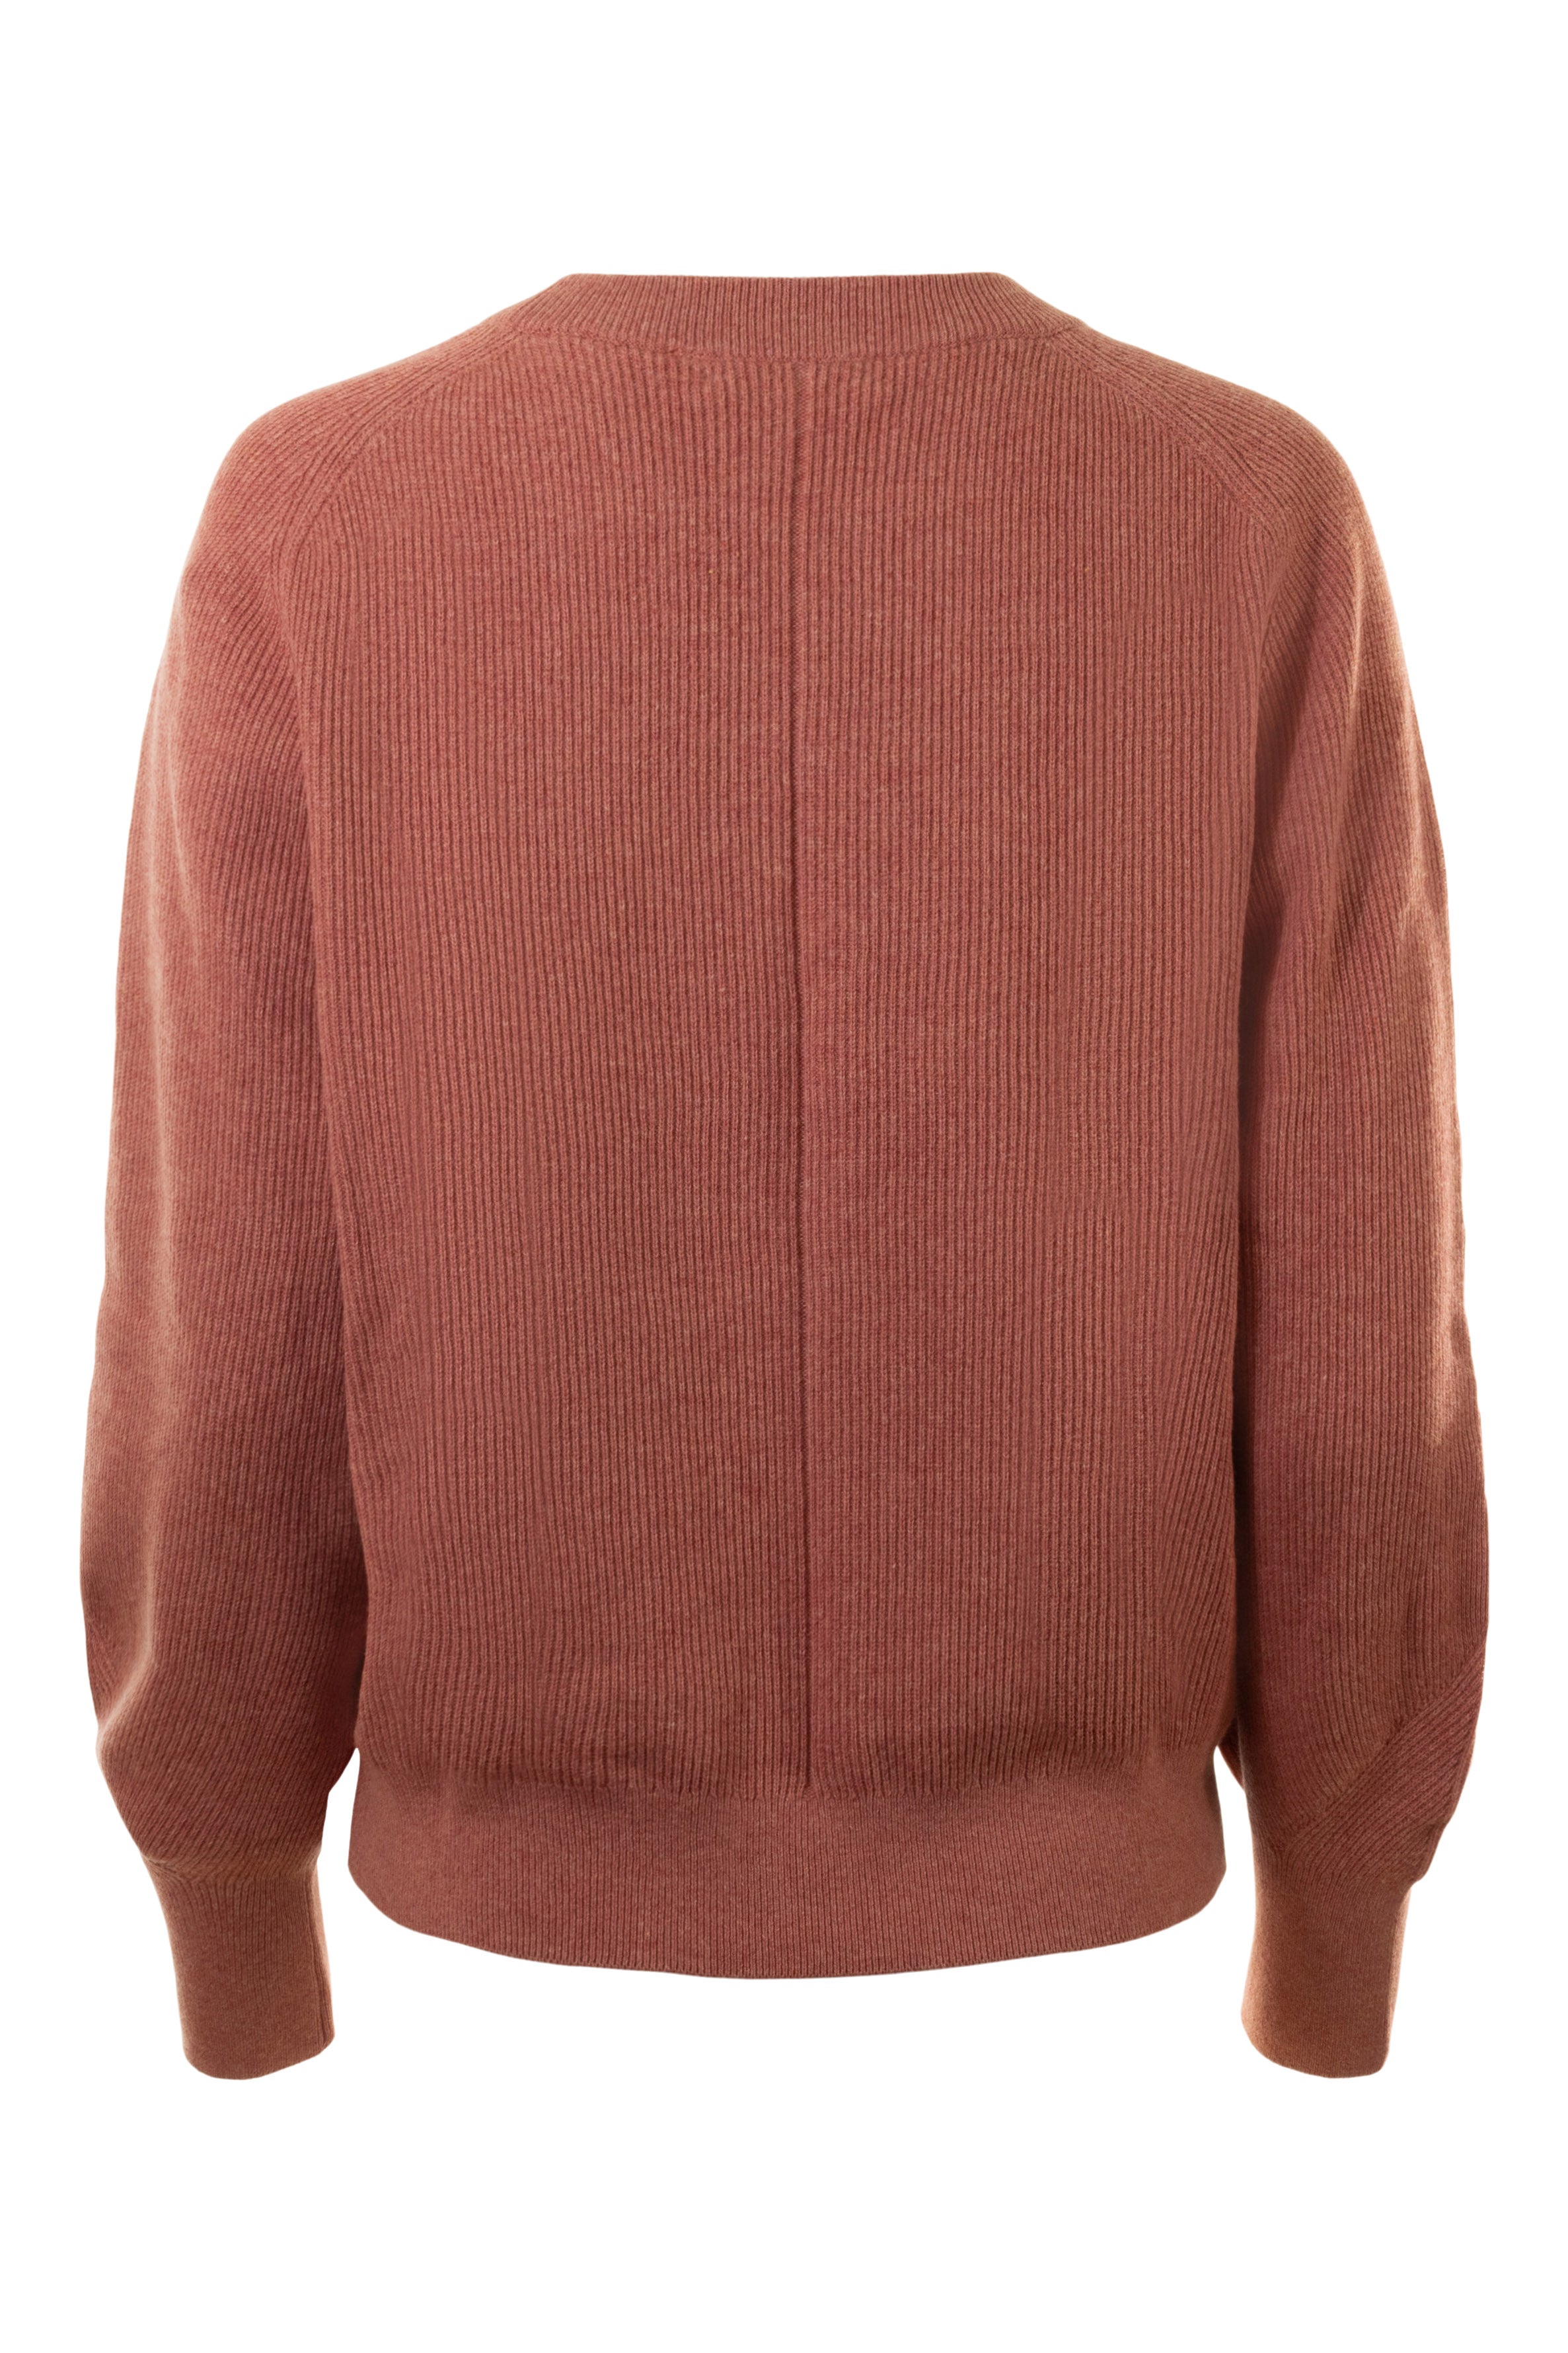 Repeat Cashmere Blouson Sleeve Sweater in Cinnamon